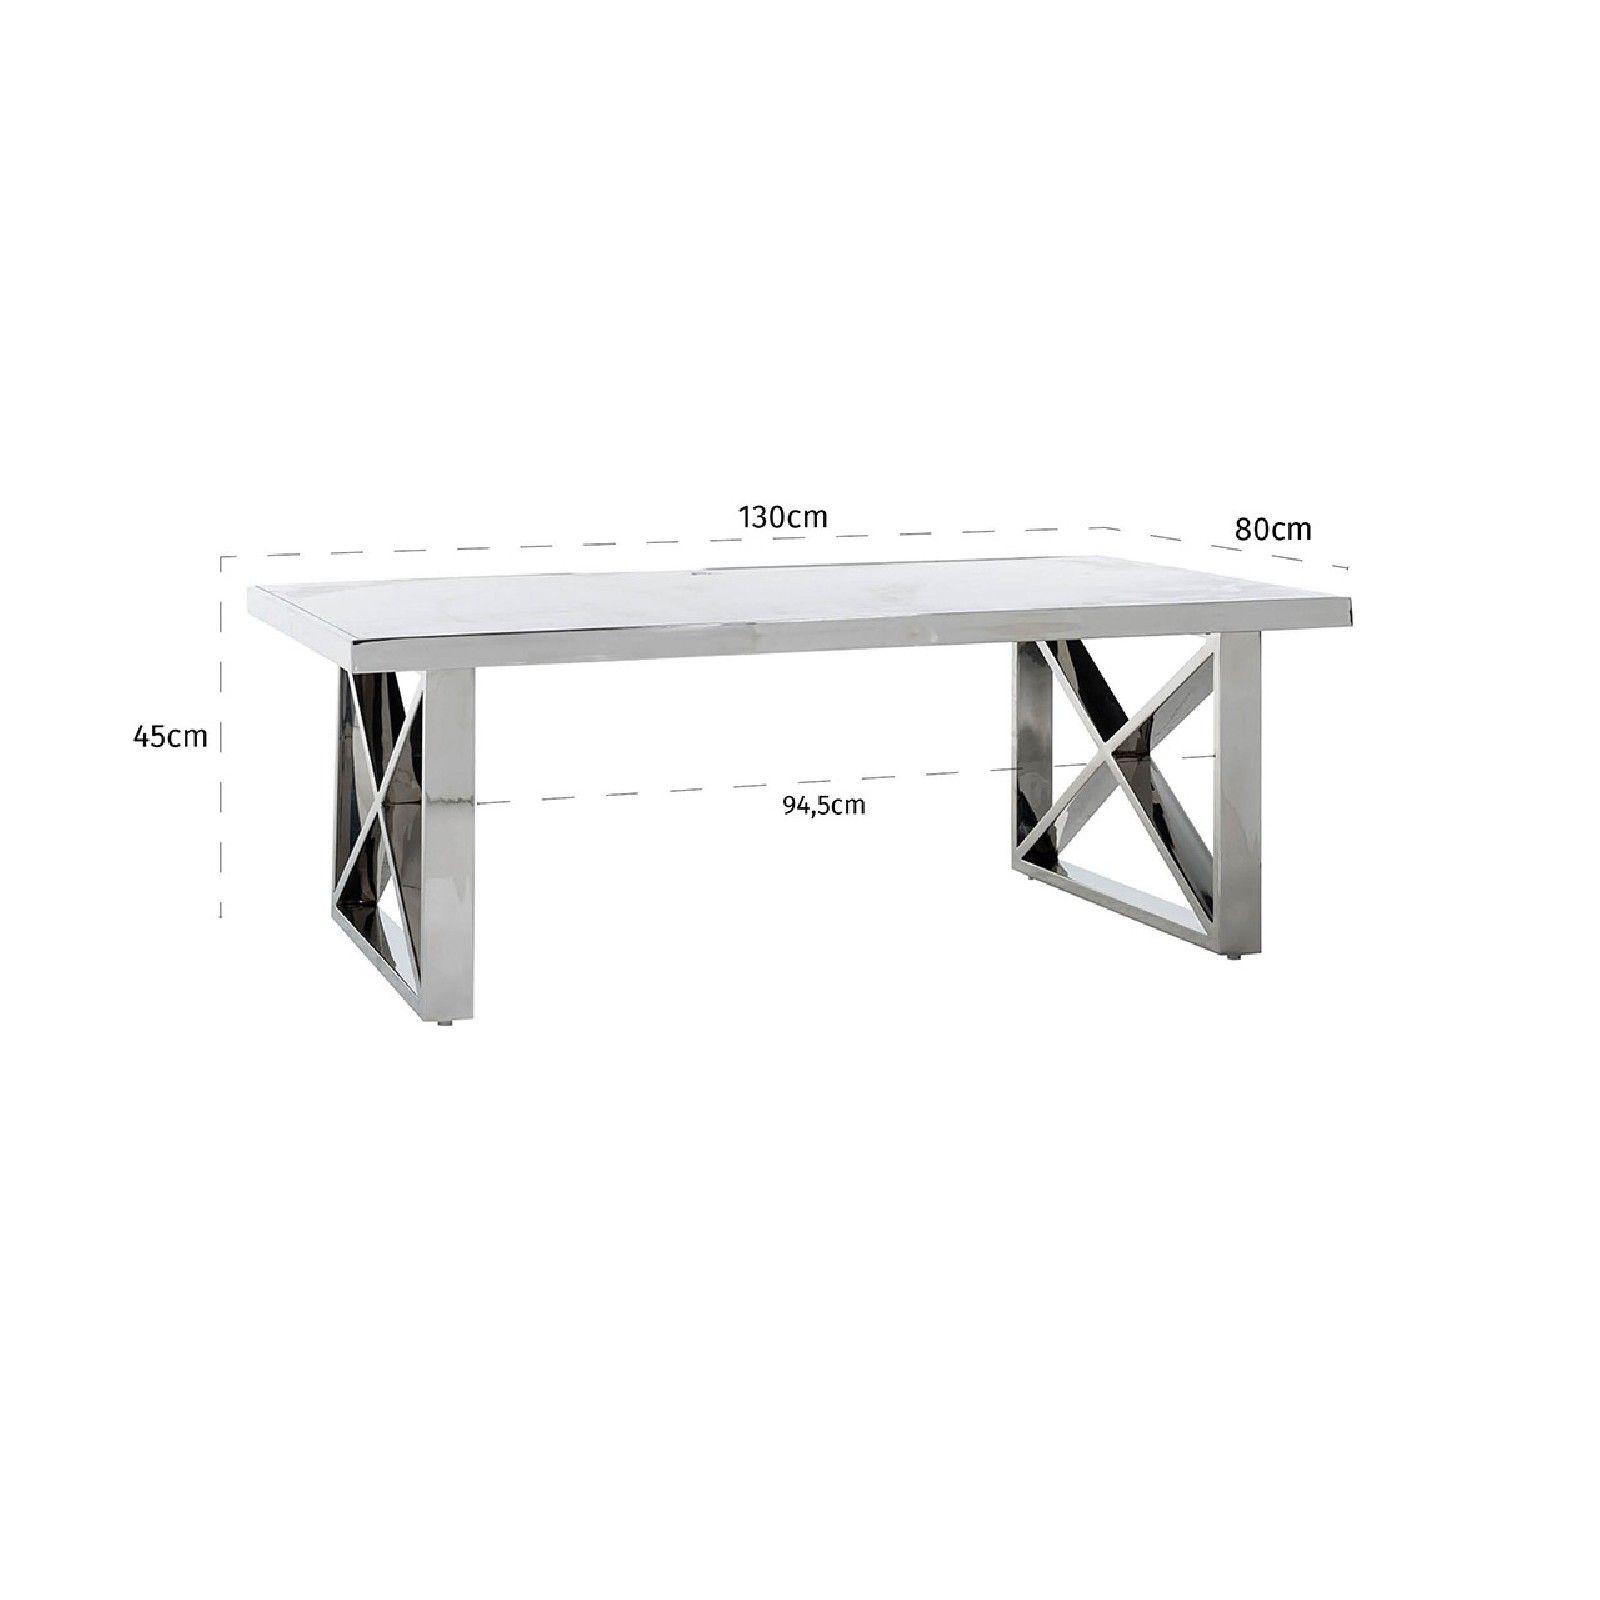 Table basse rectangulaire - Inox et marbre blanc 